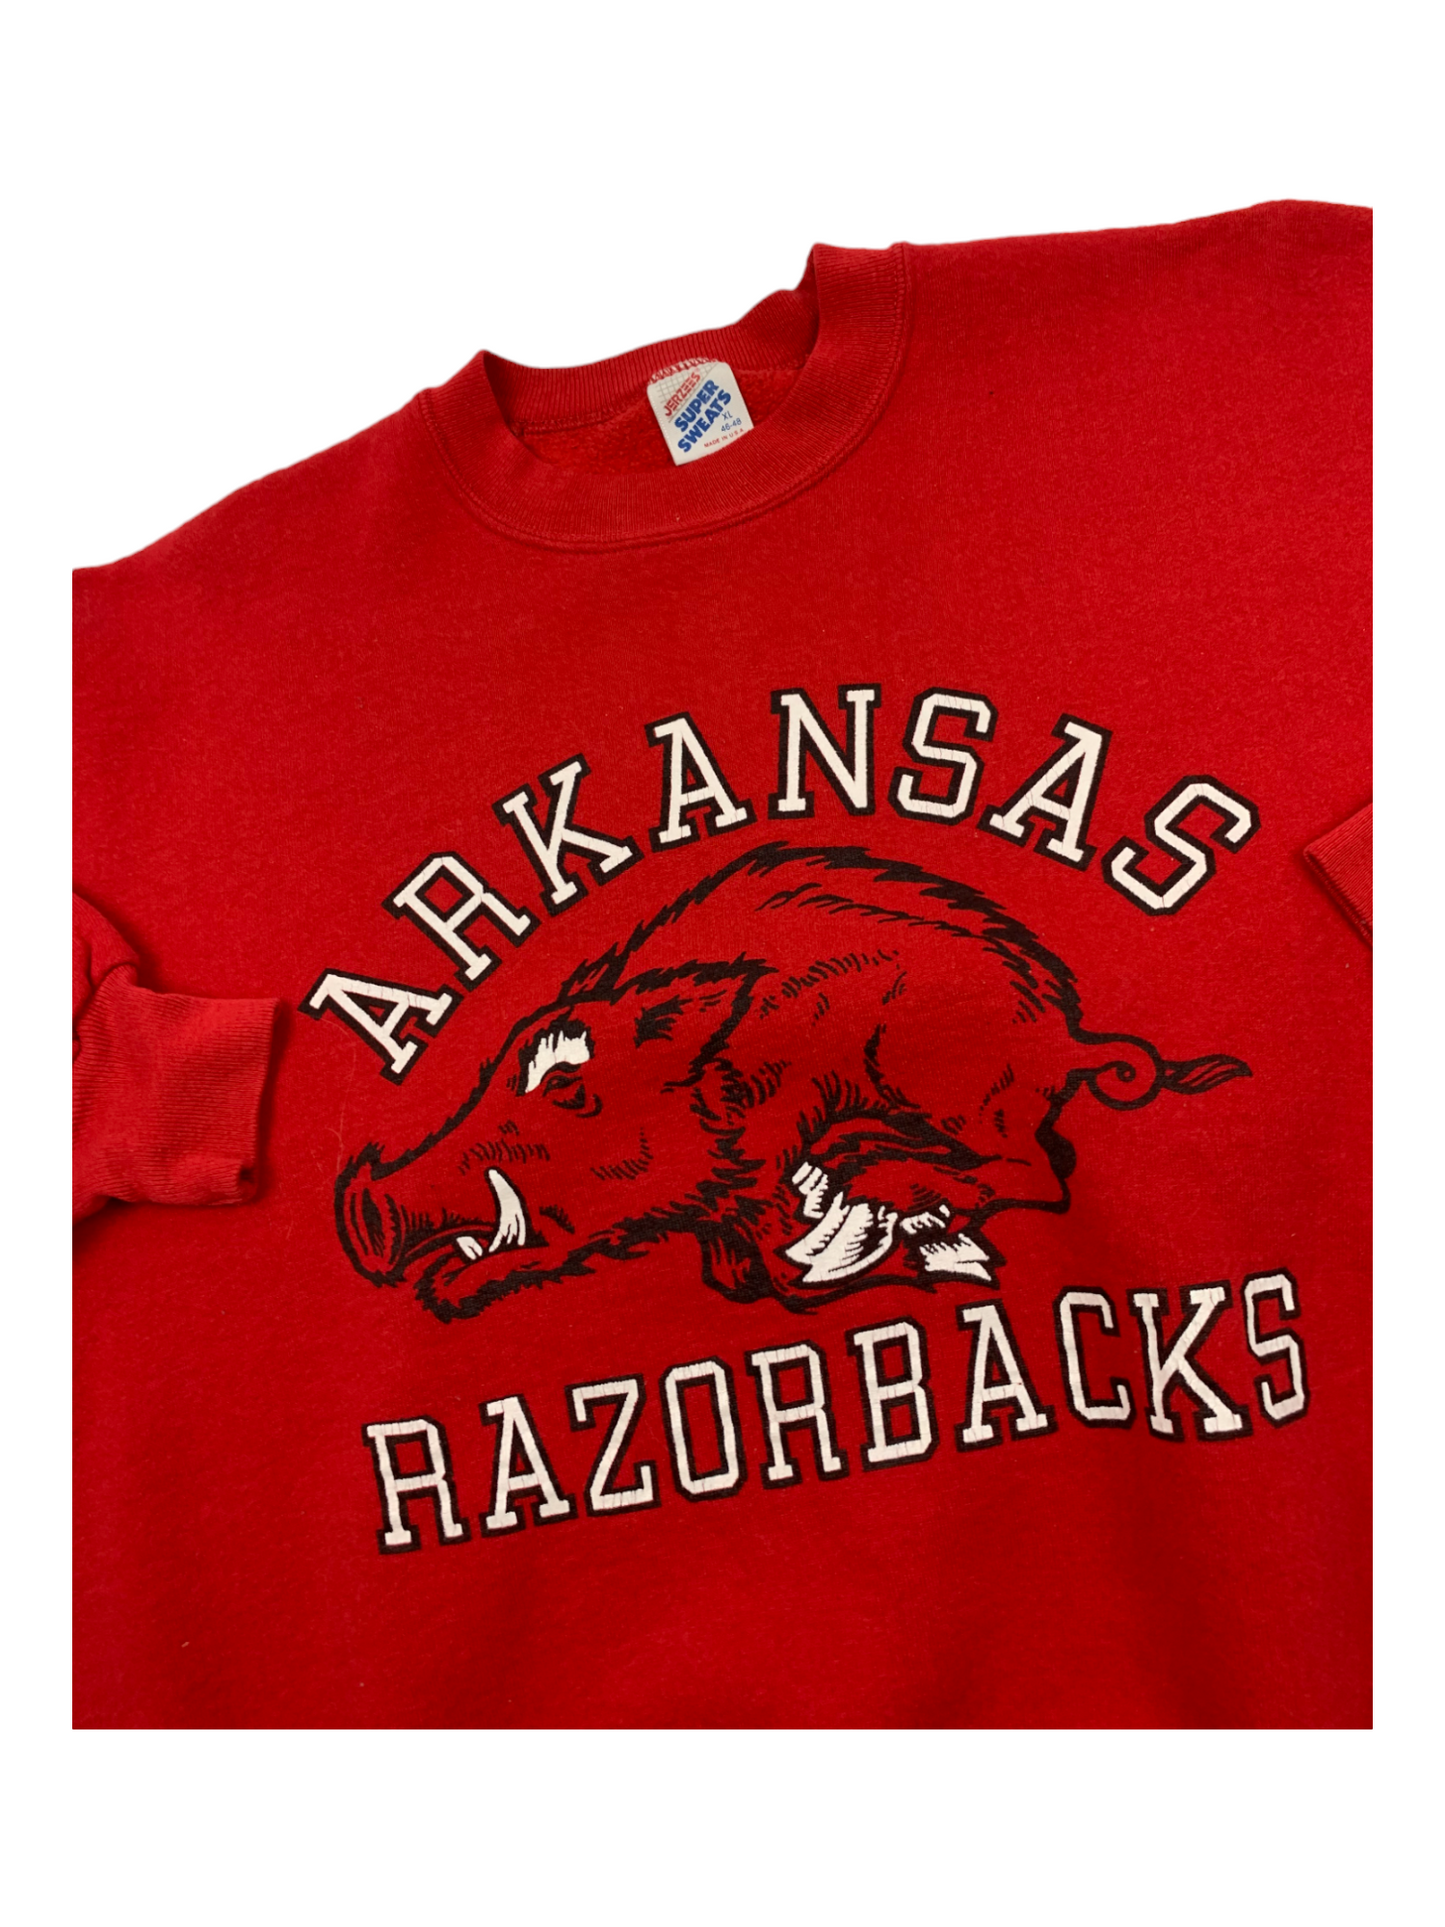 Arkansas Razorbacks Red Crewneck